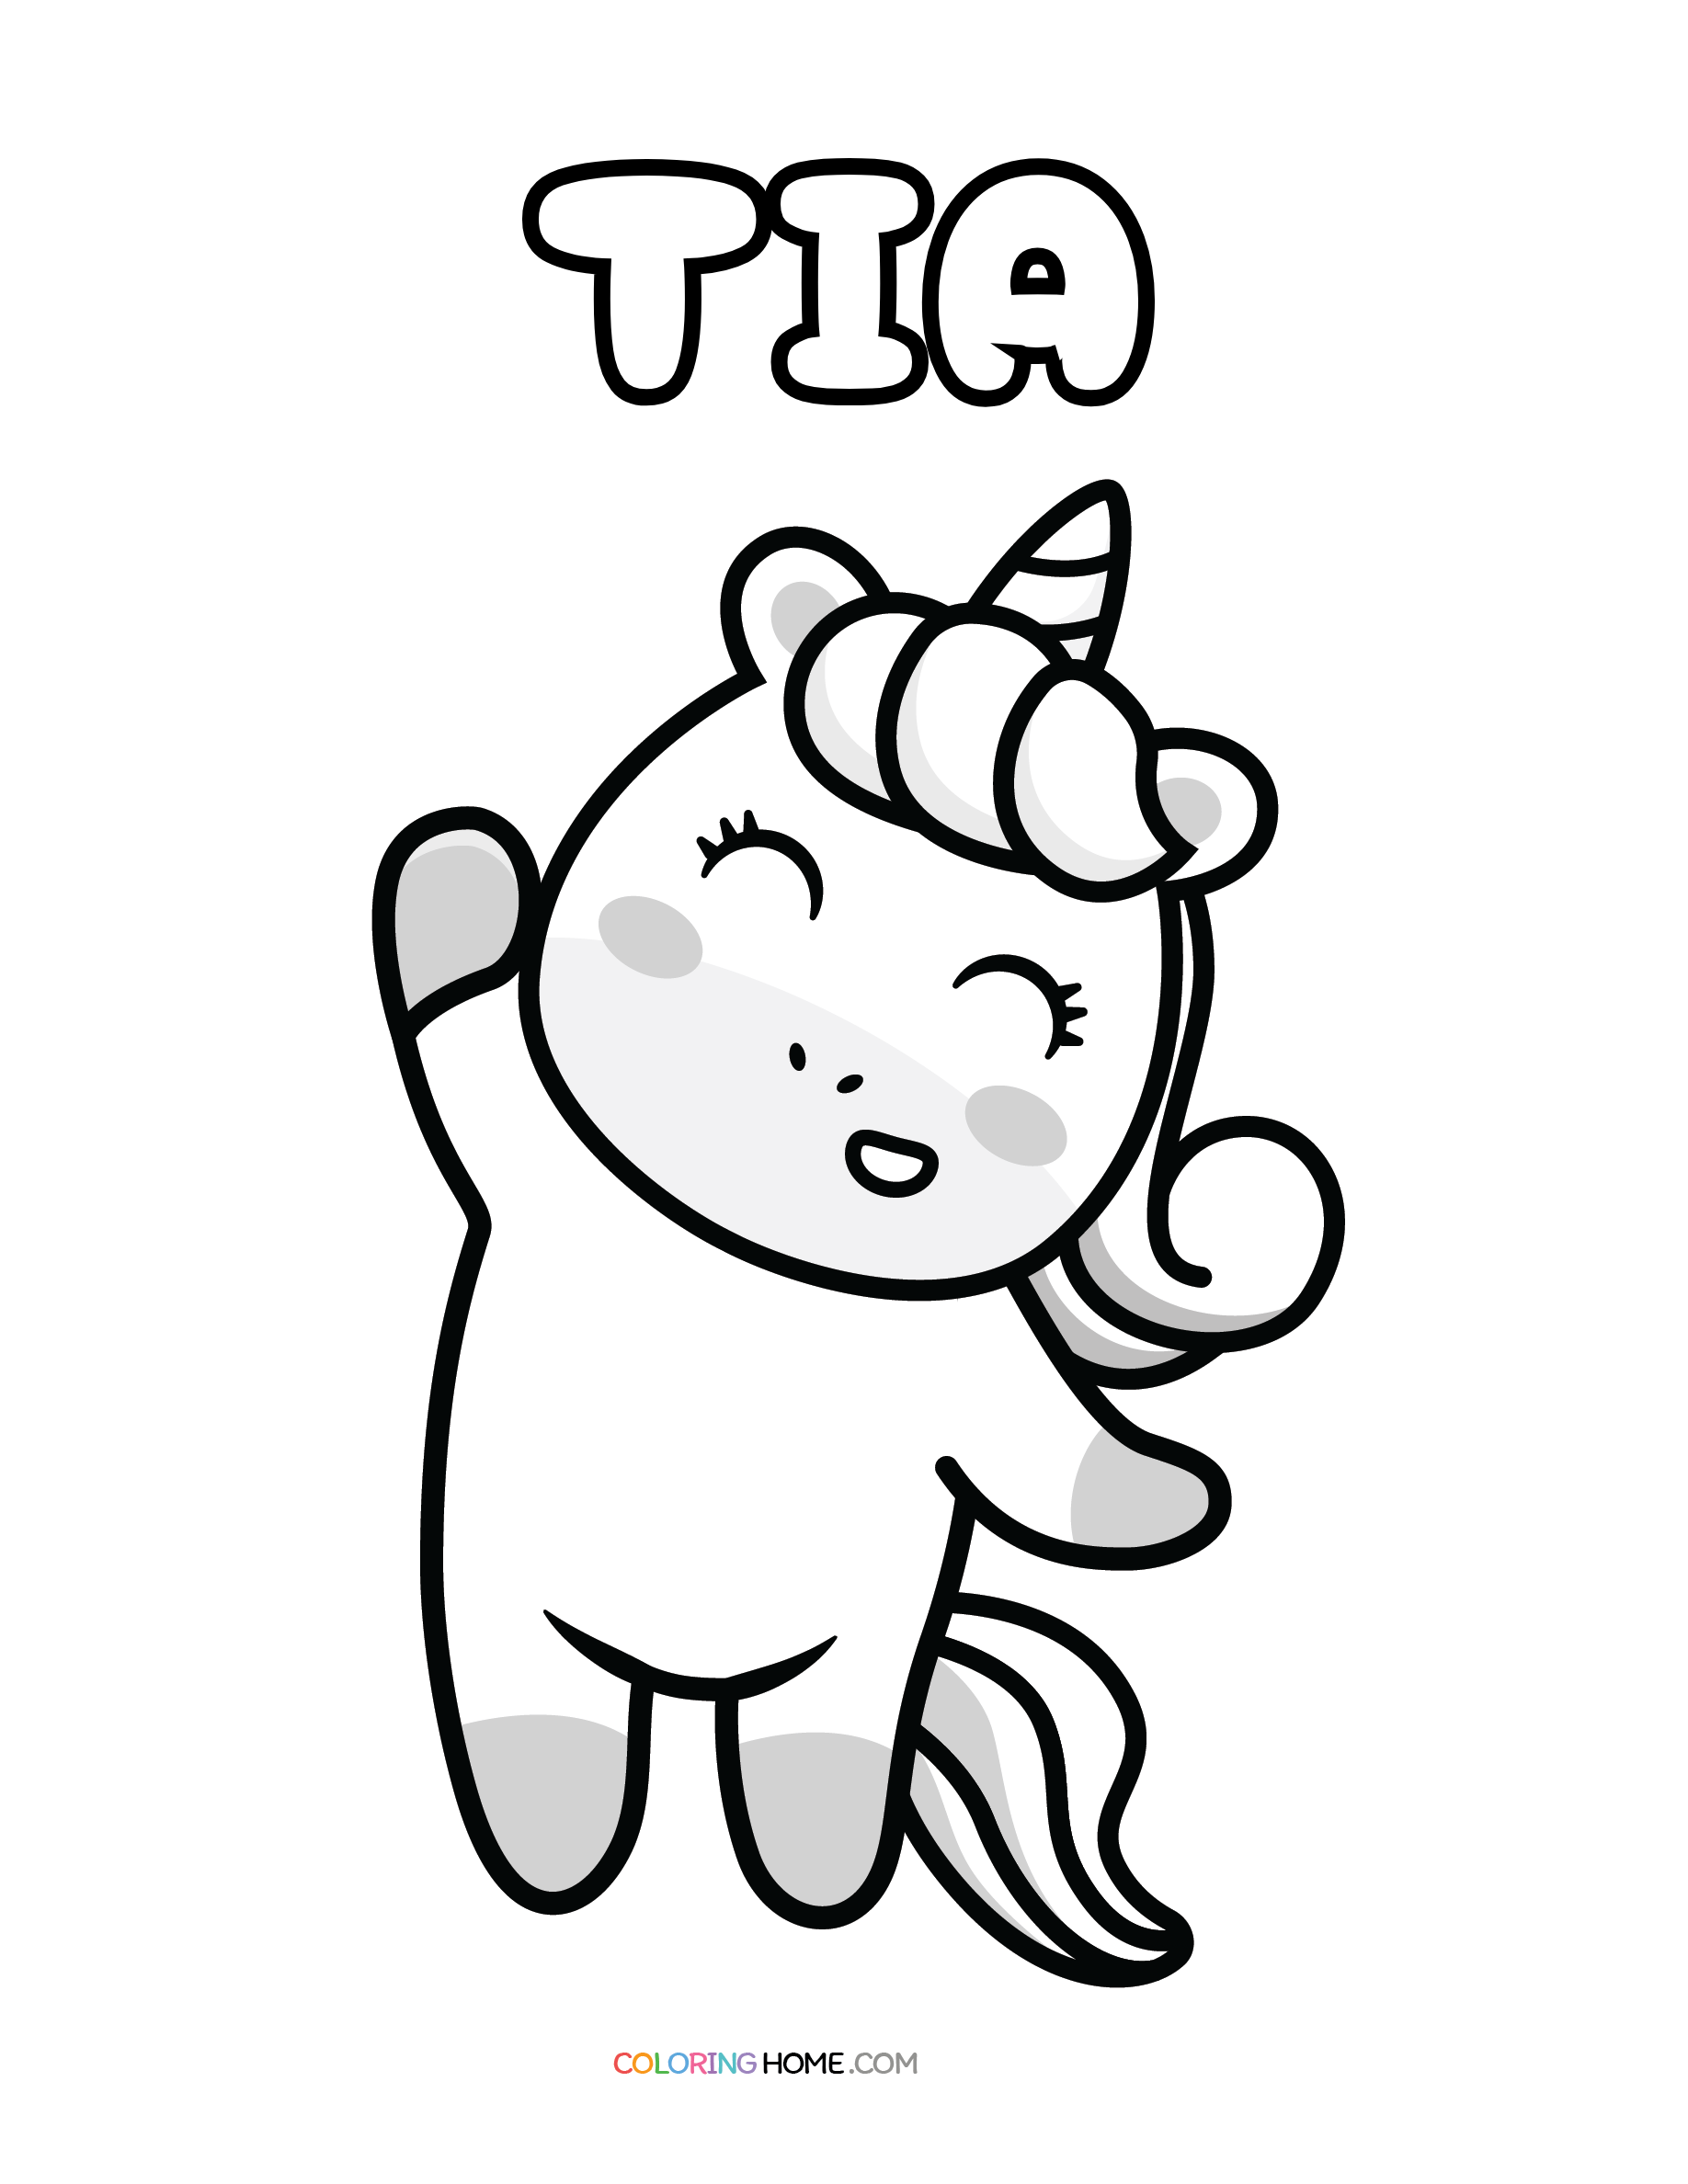 Tia unicorn coloring page